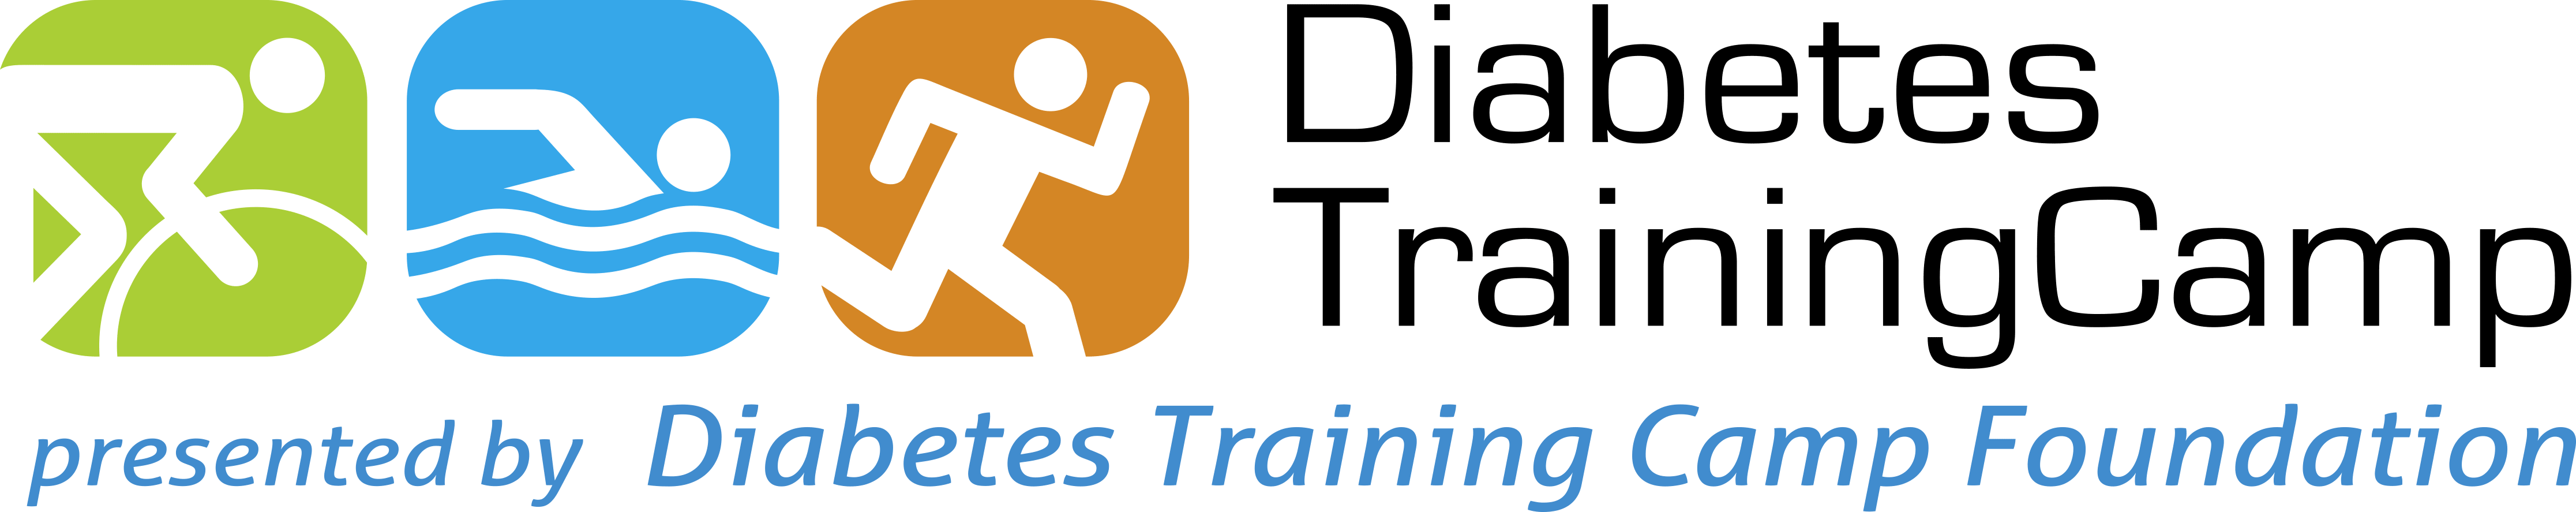 Diabetes Training Camp